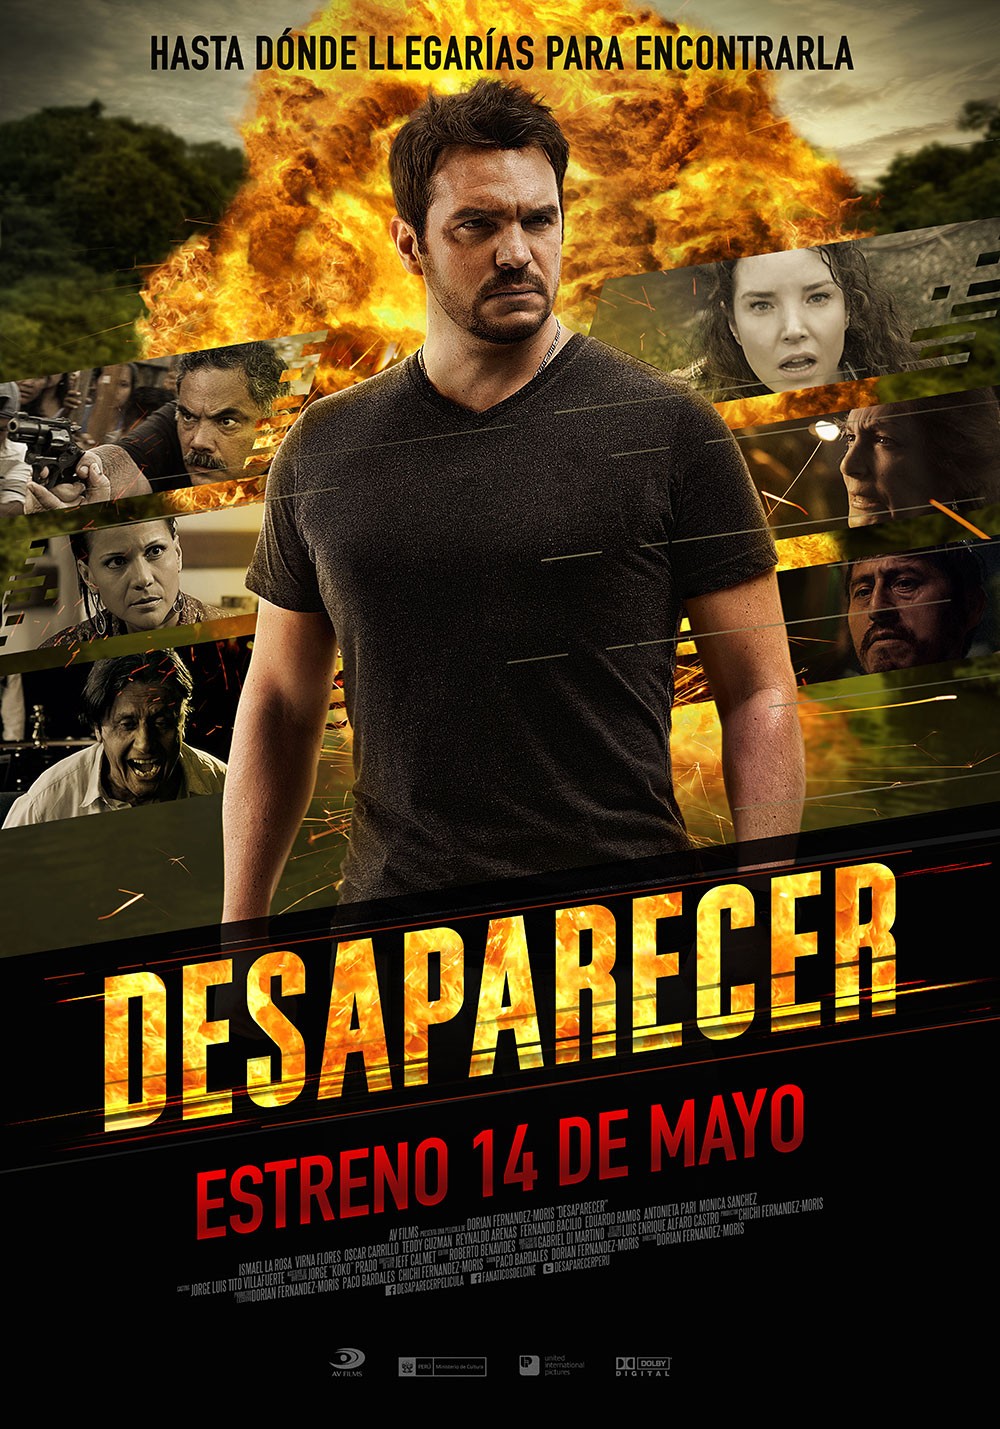 Extra Large Movie Poster Image for Desaparecer 